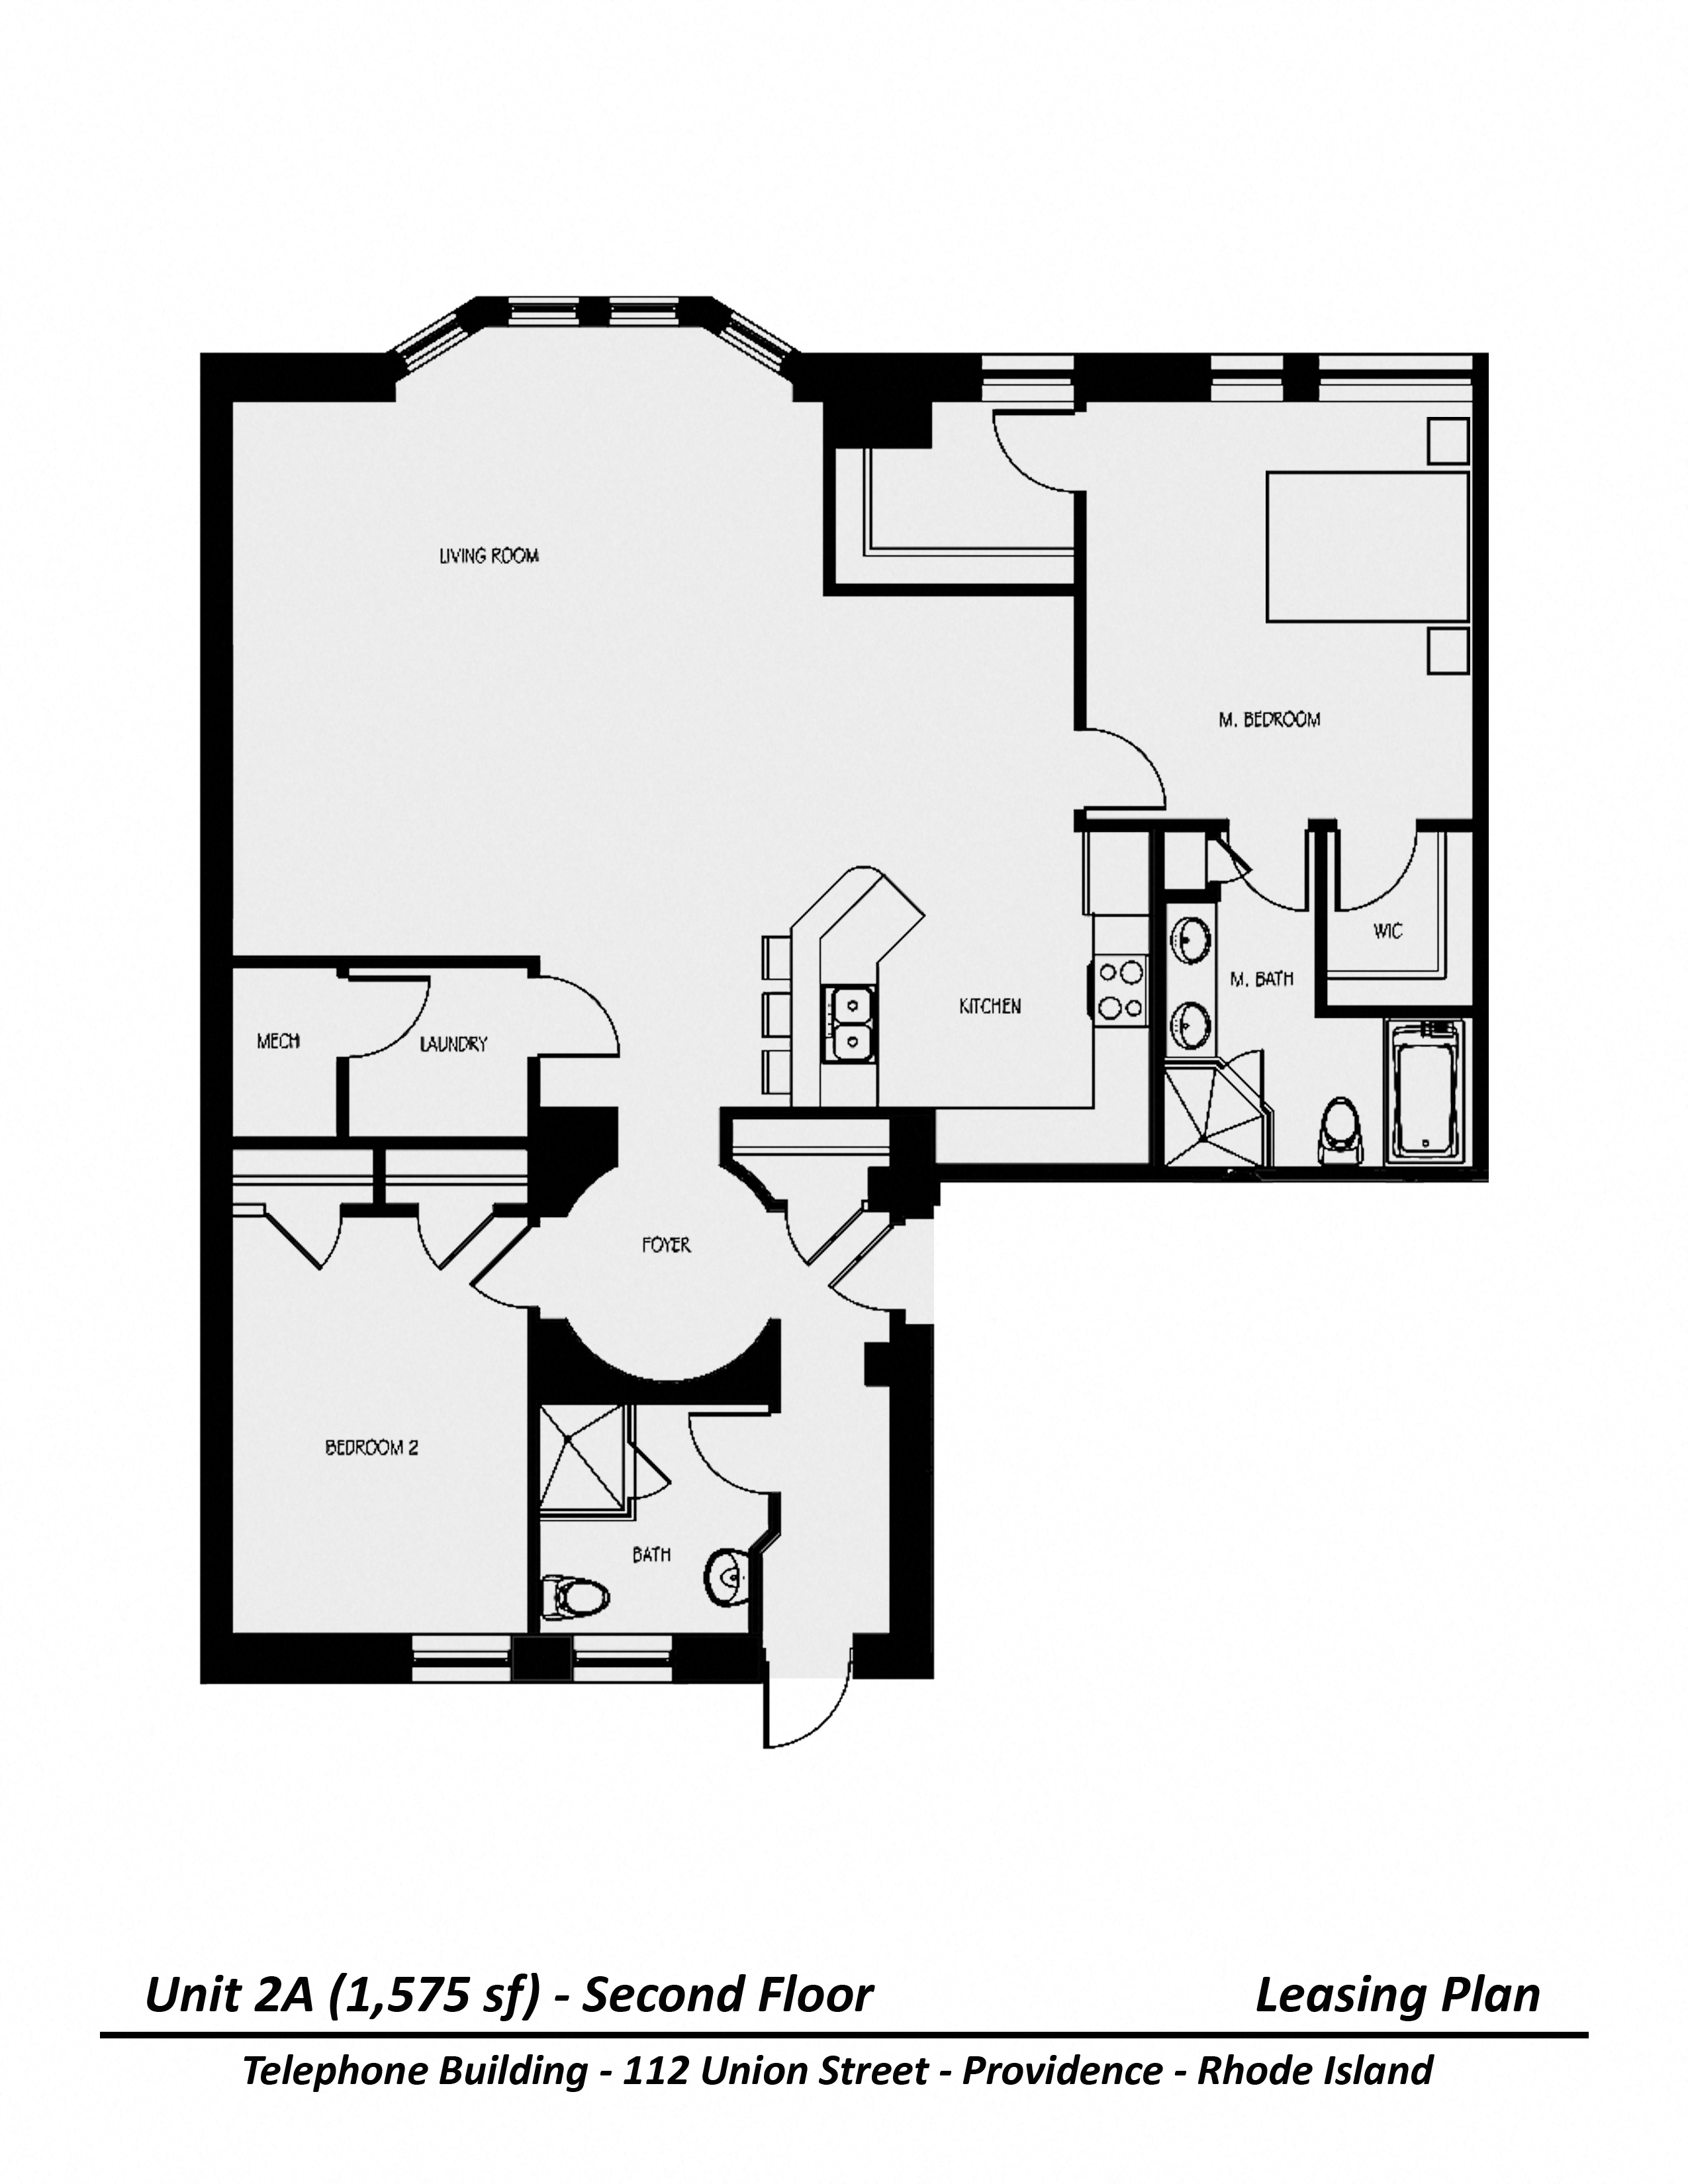 Click to view Two Bedroom floor plan gallery